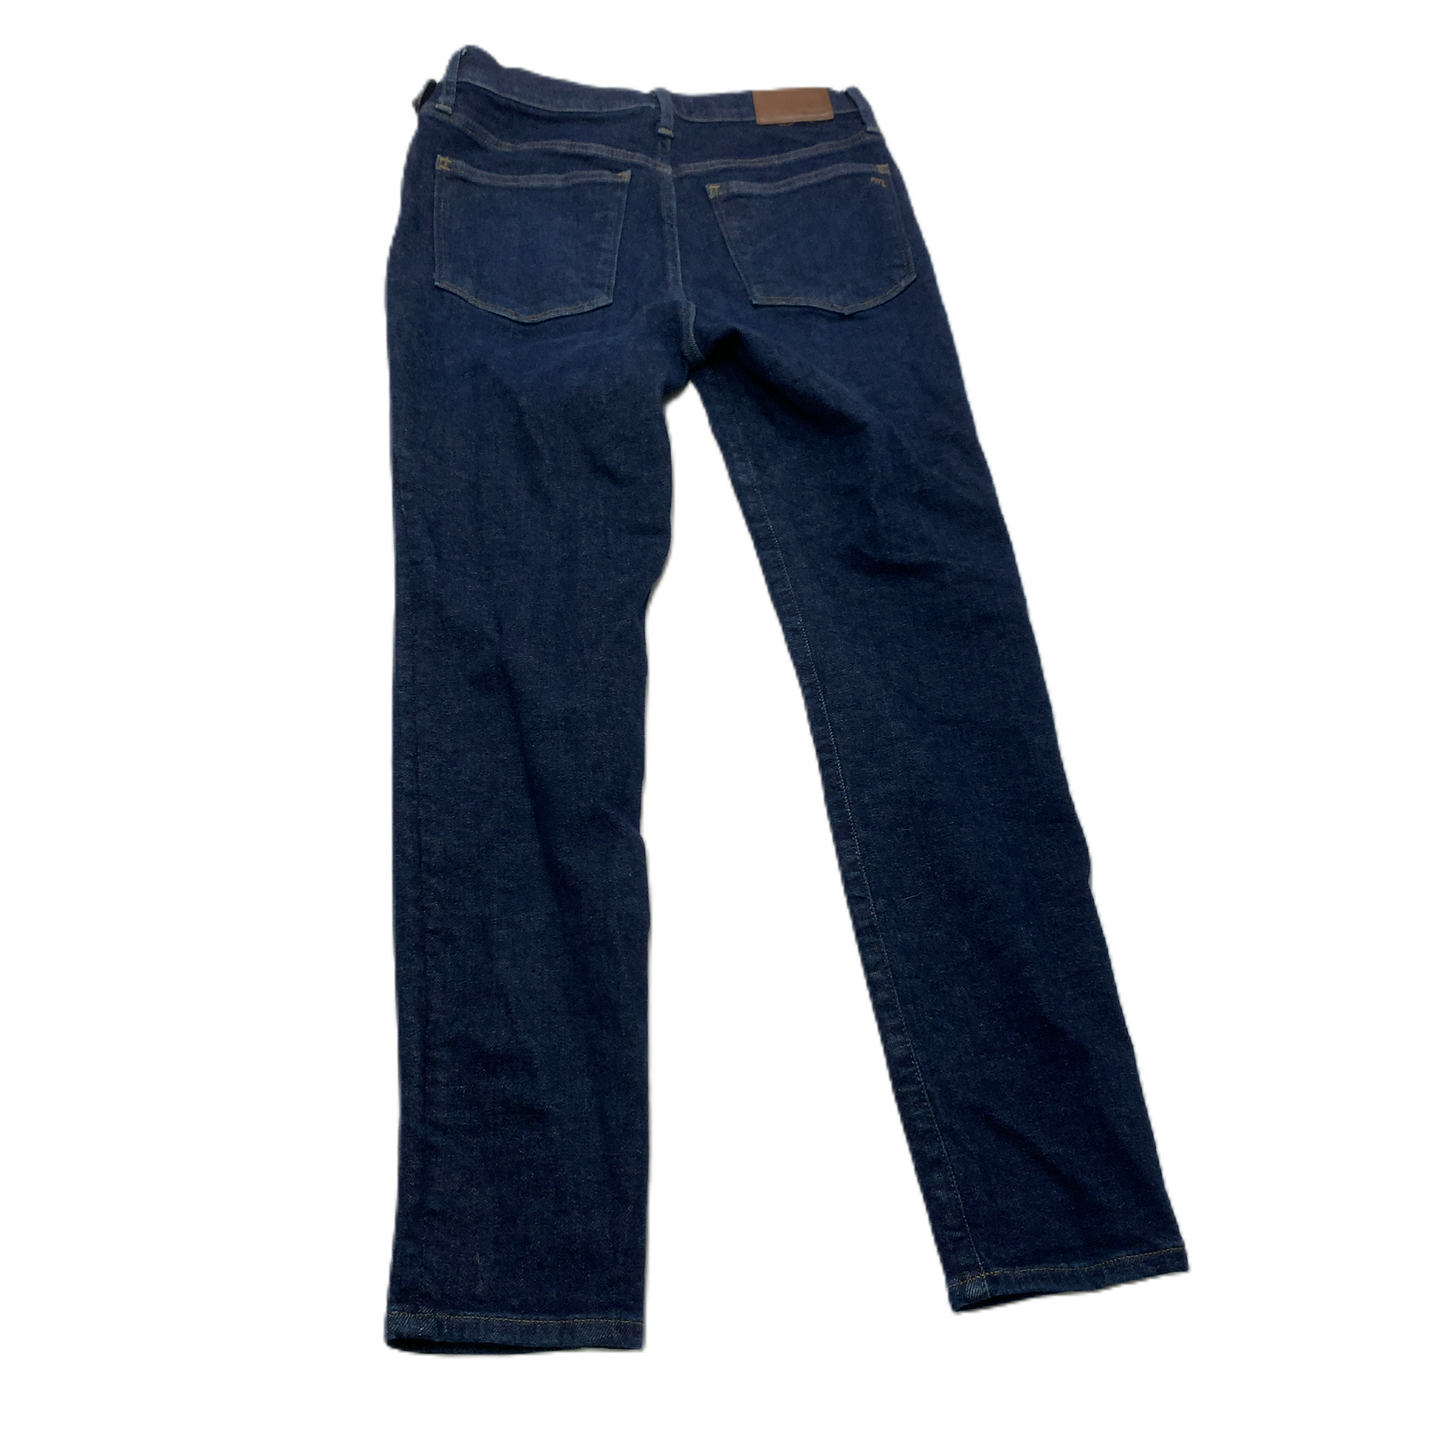 Blue Denim  Jeans Skinny By Madewell  Size: 6